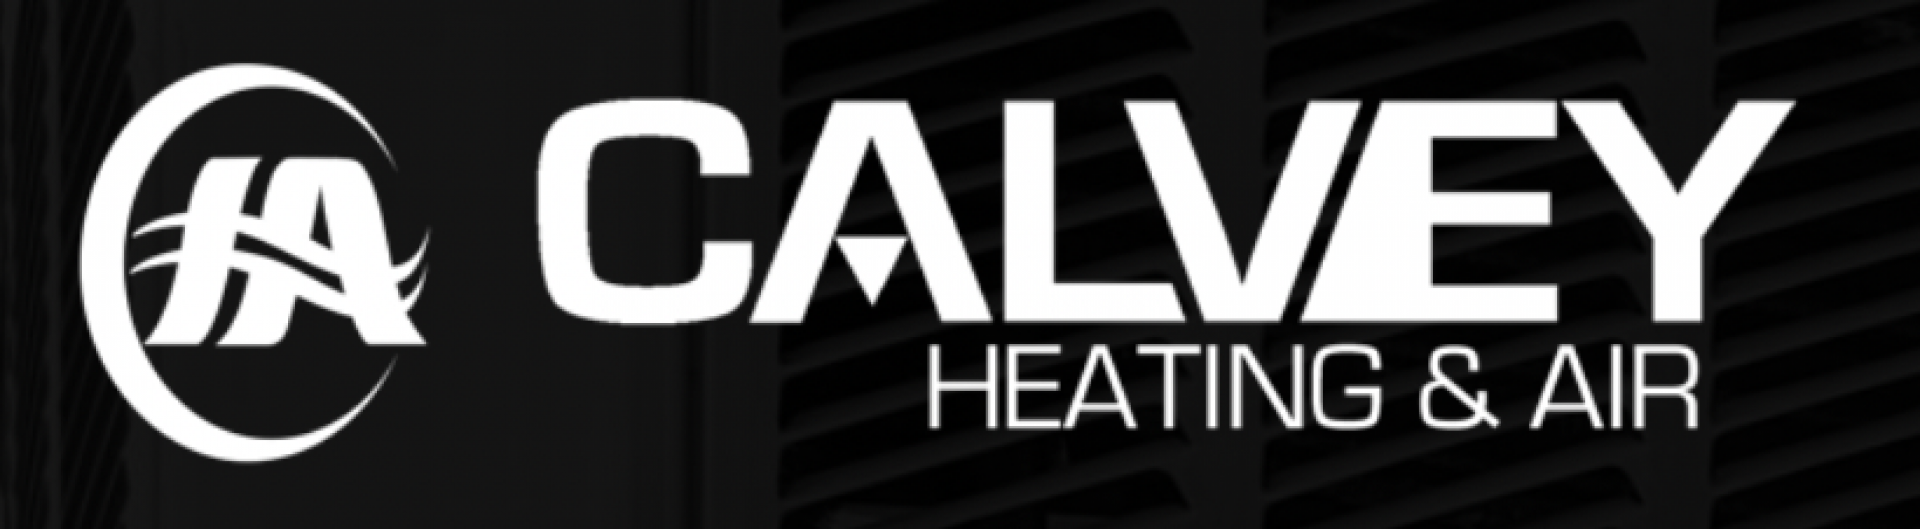 Calvey Heating & Air company logo